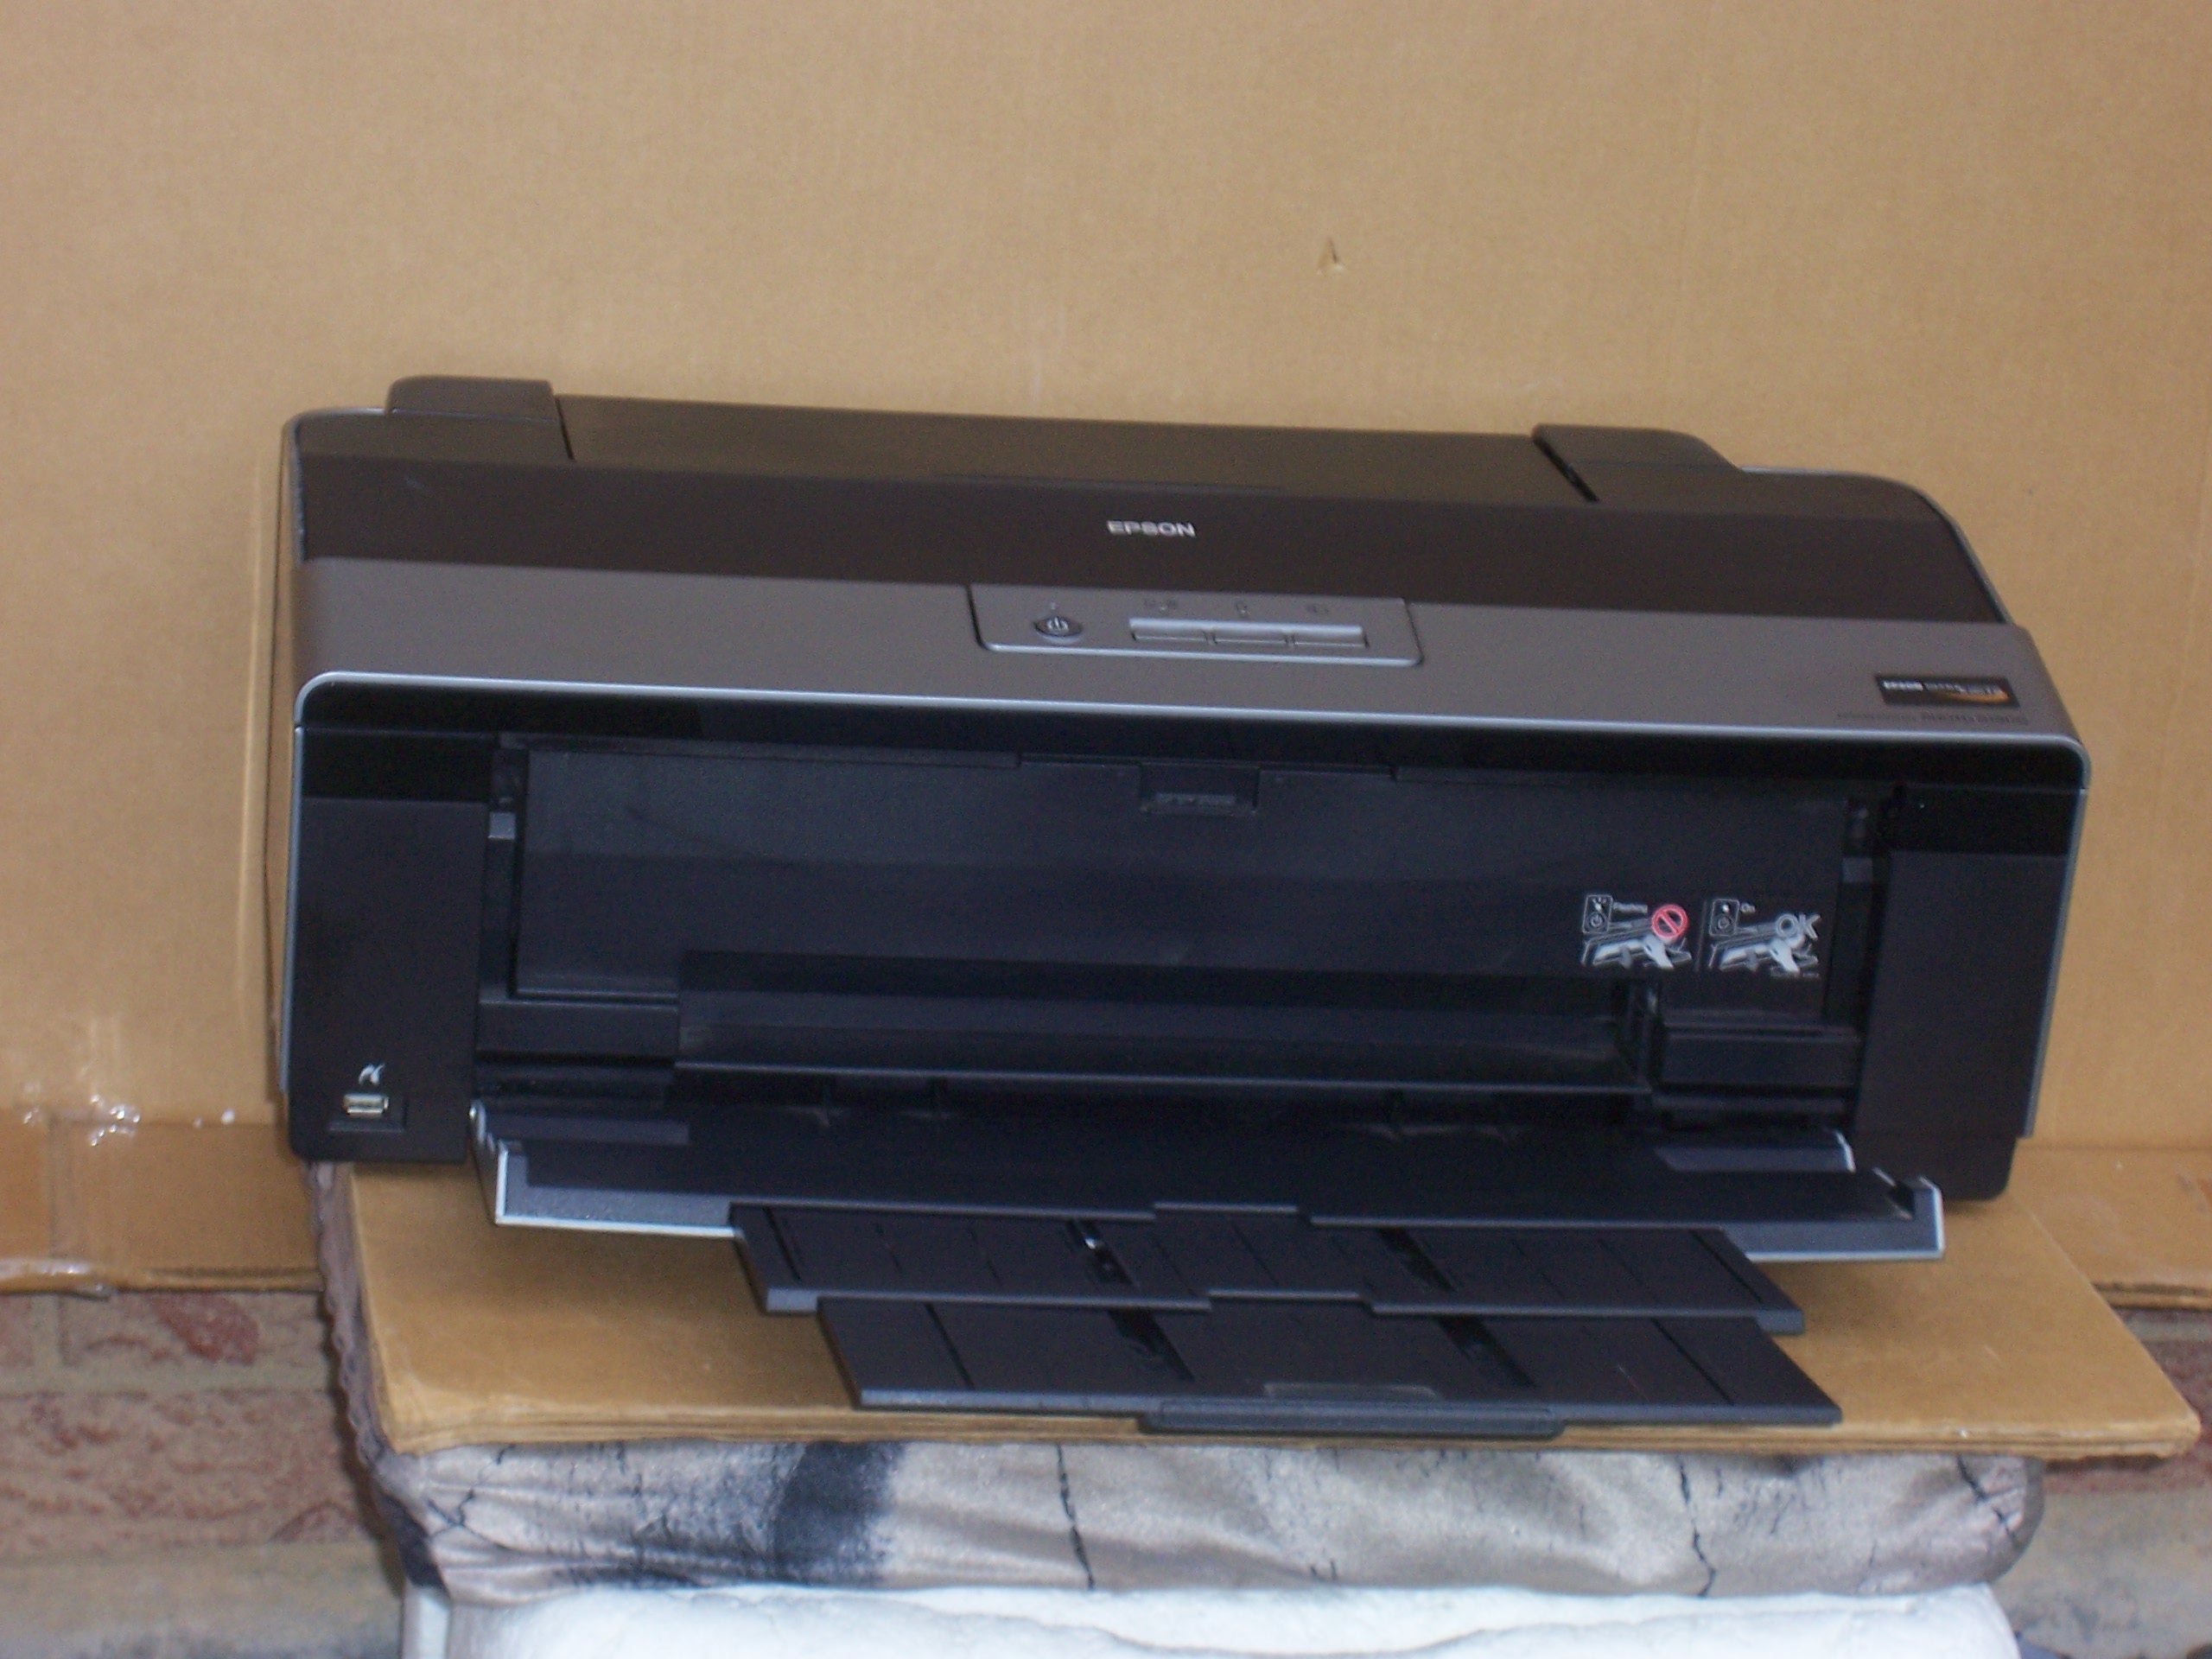 Epson Stylus Photo R1900 Ink Jet Printer Imagine41 4960